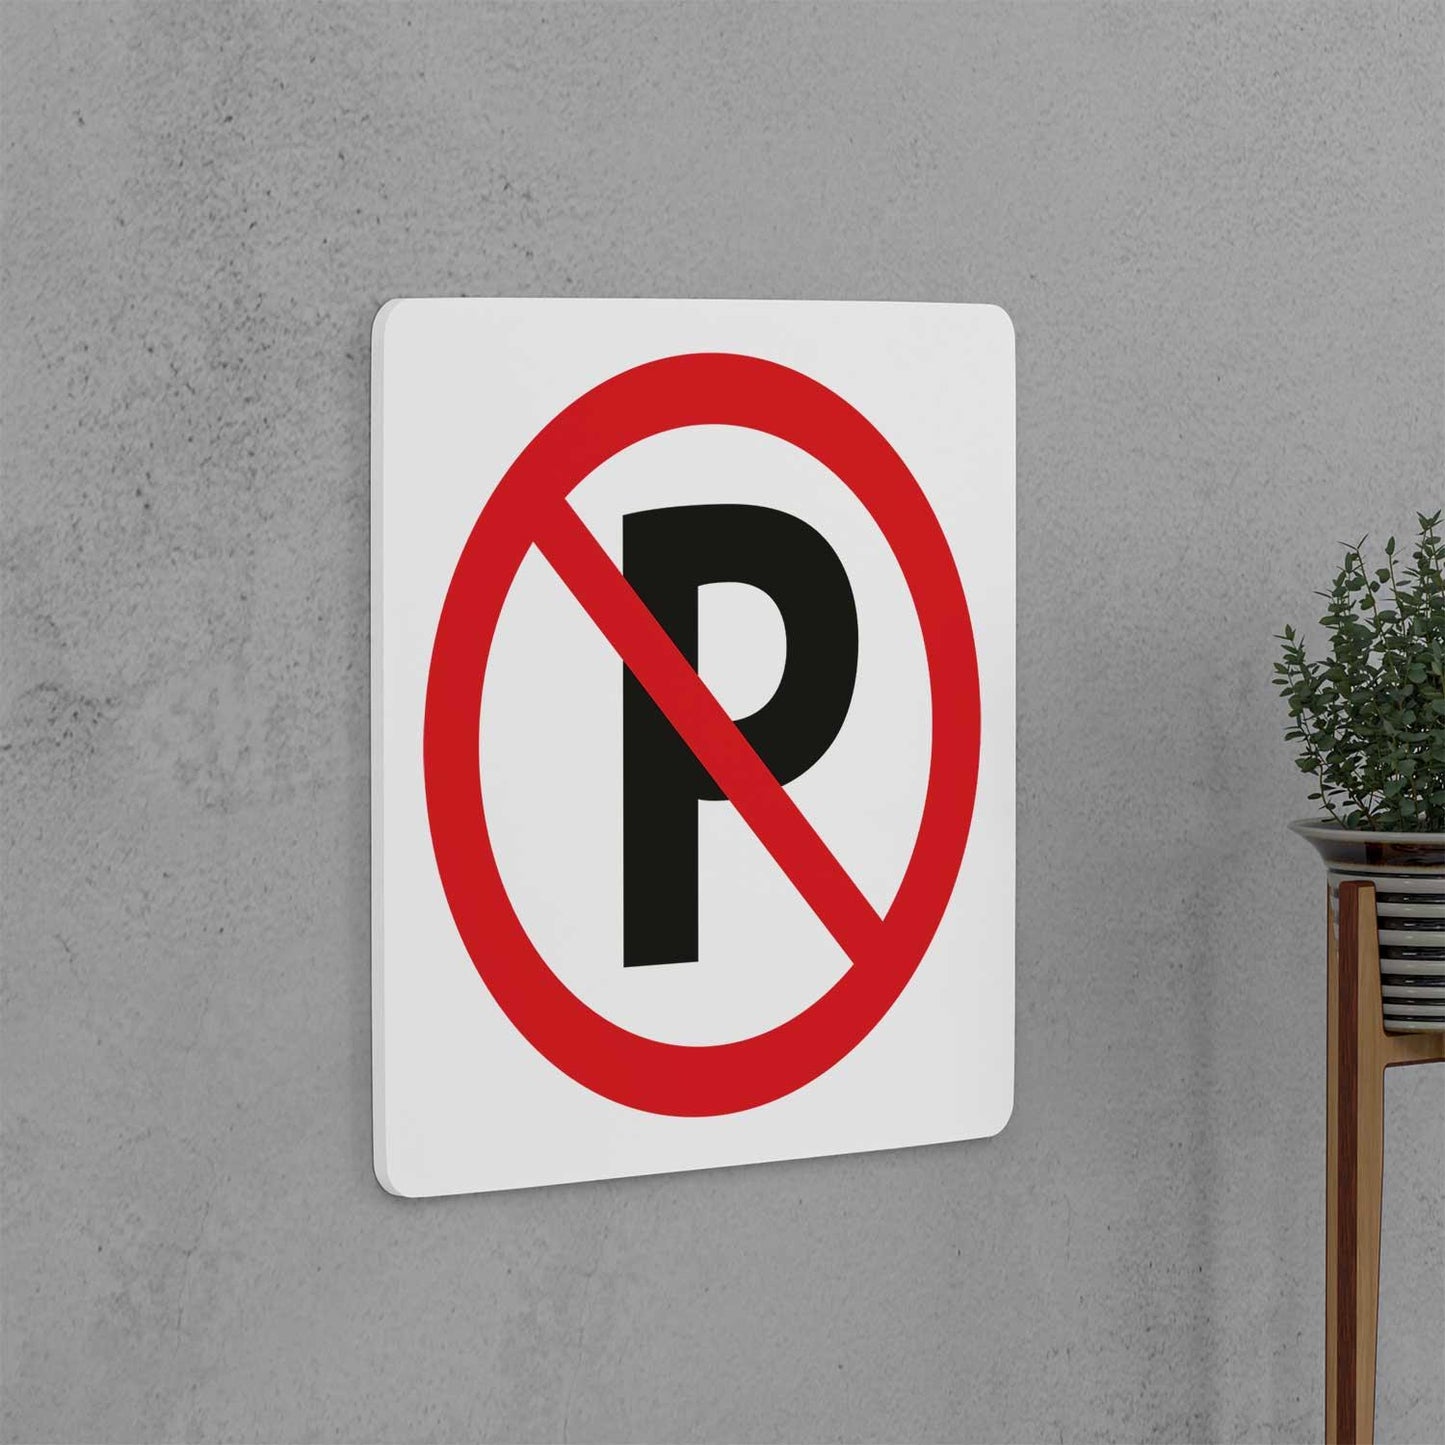 No Parking Sign - Housenama